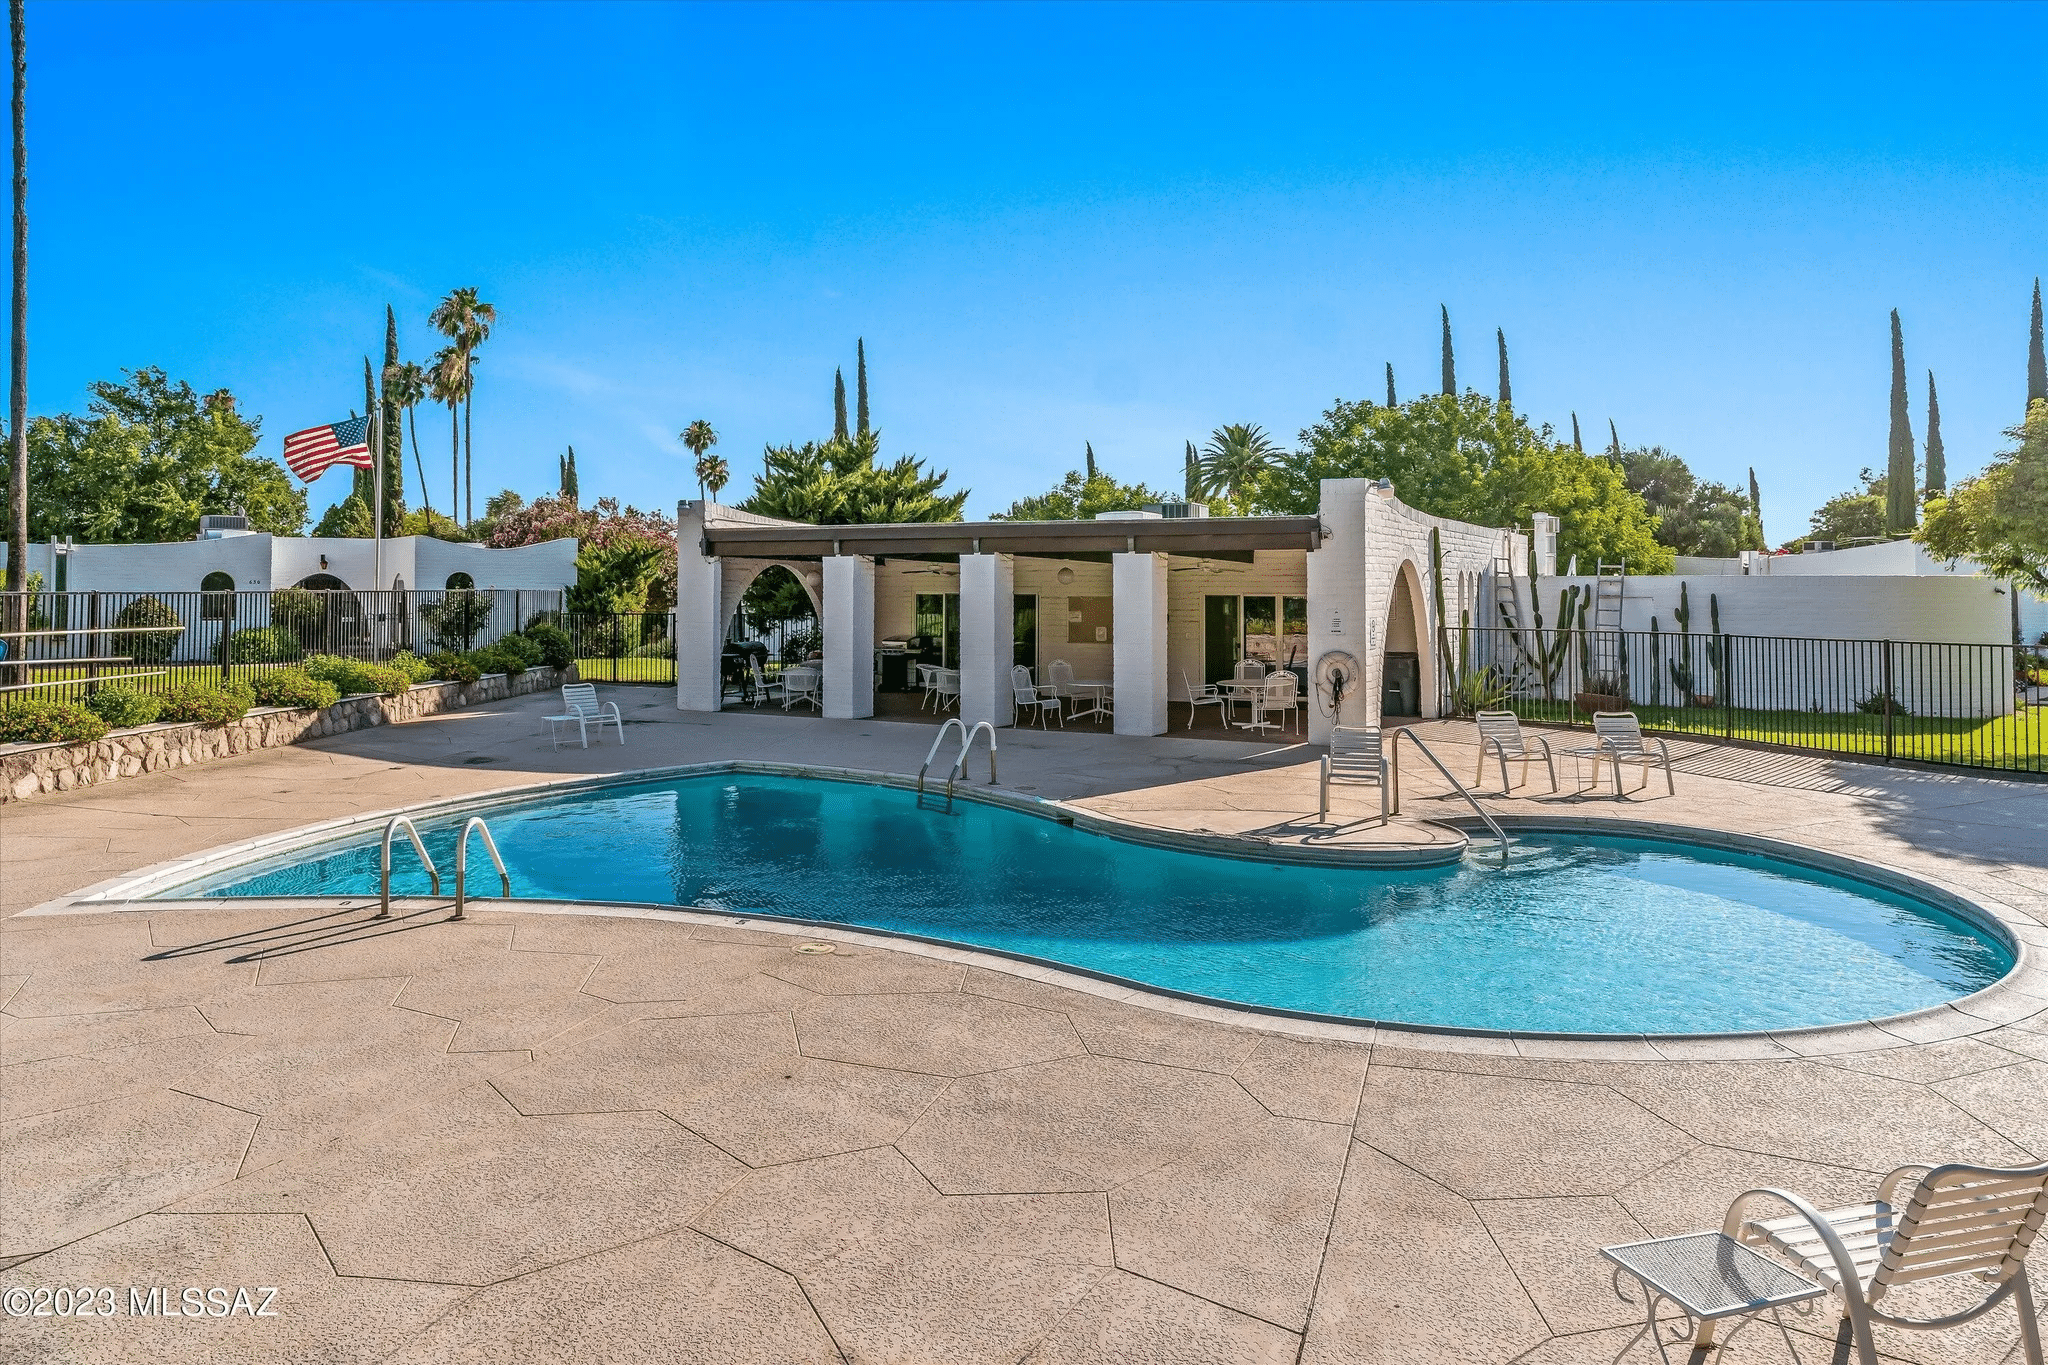 Community swimming pool at 636 W Roller Coaster Rd, Tucson, AZ